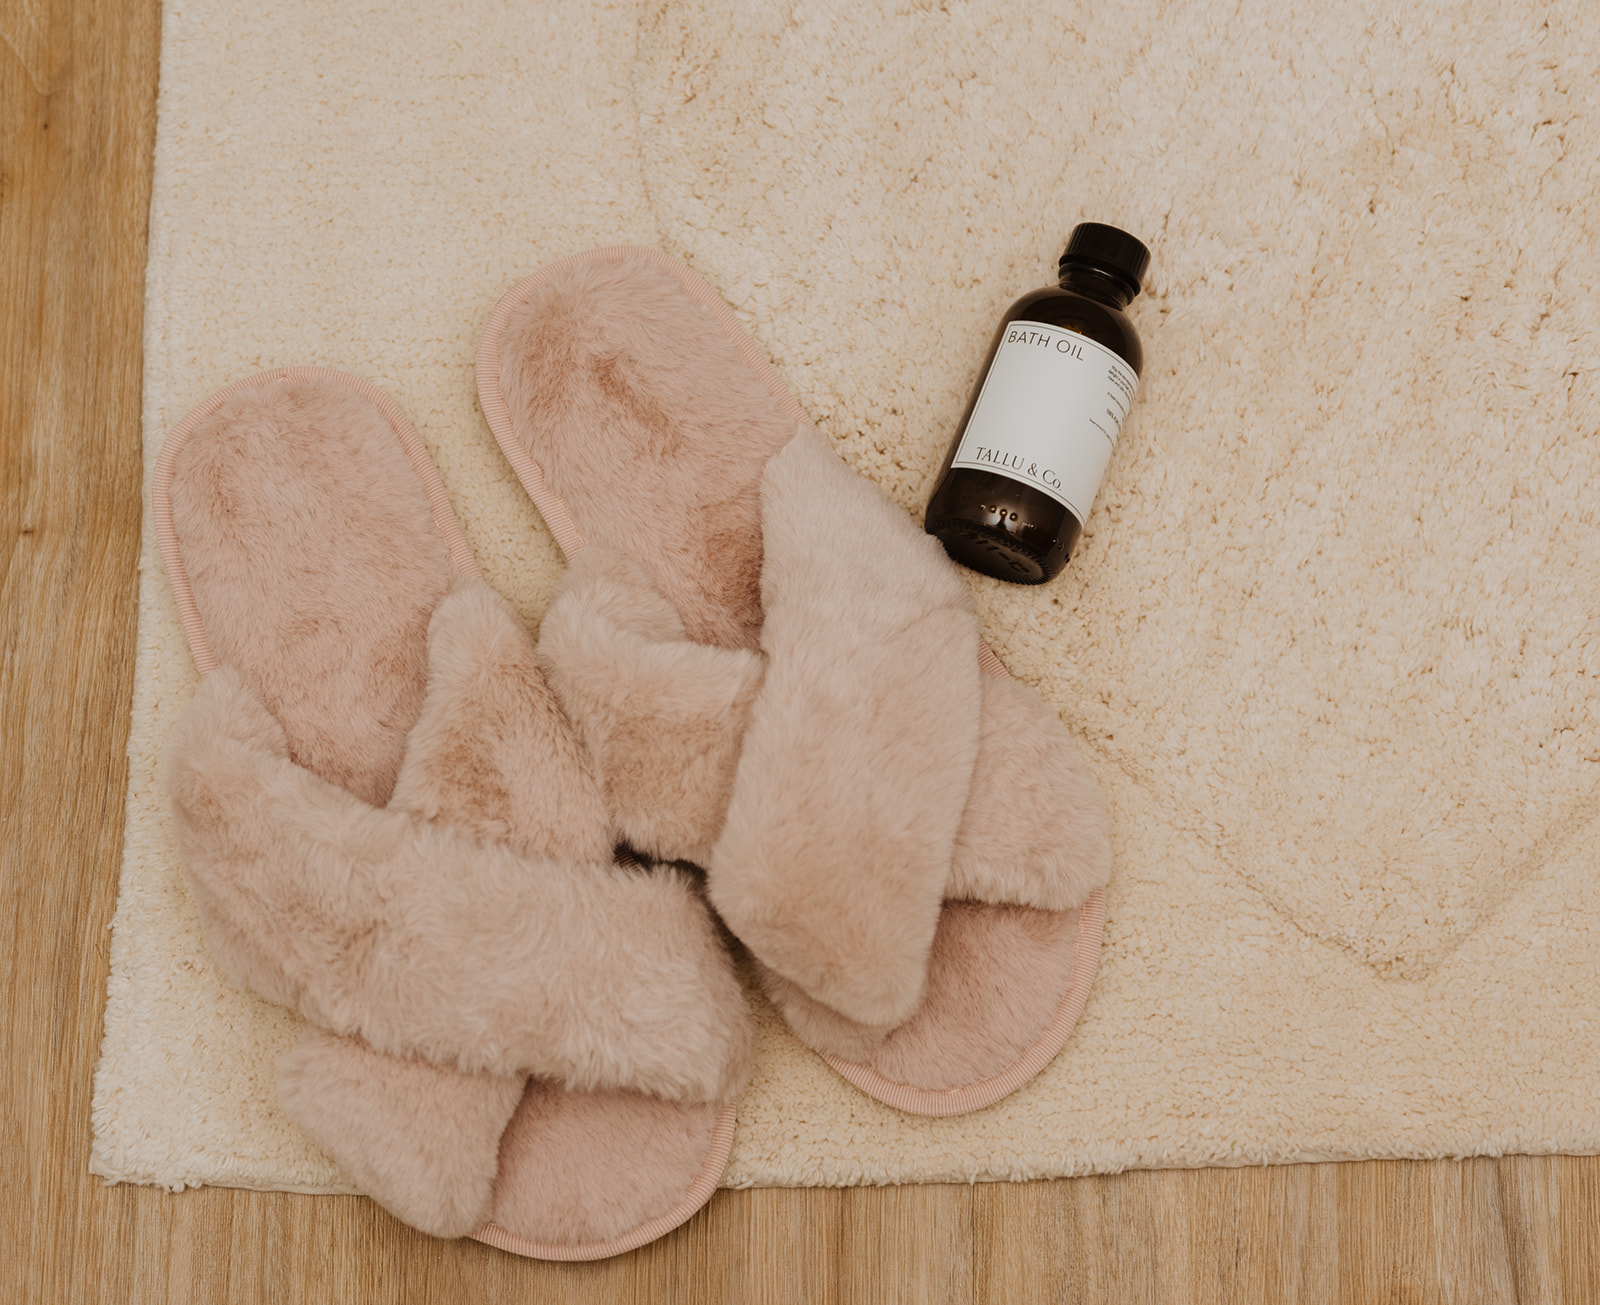 slippers and bath oil on cream bath mat